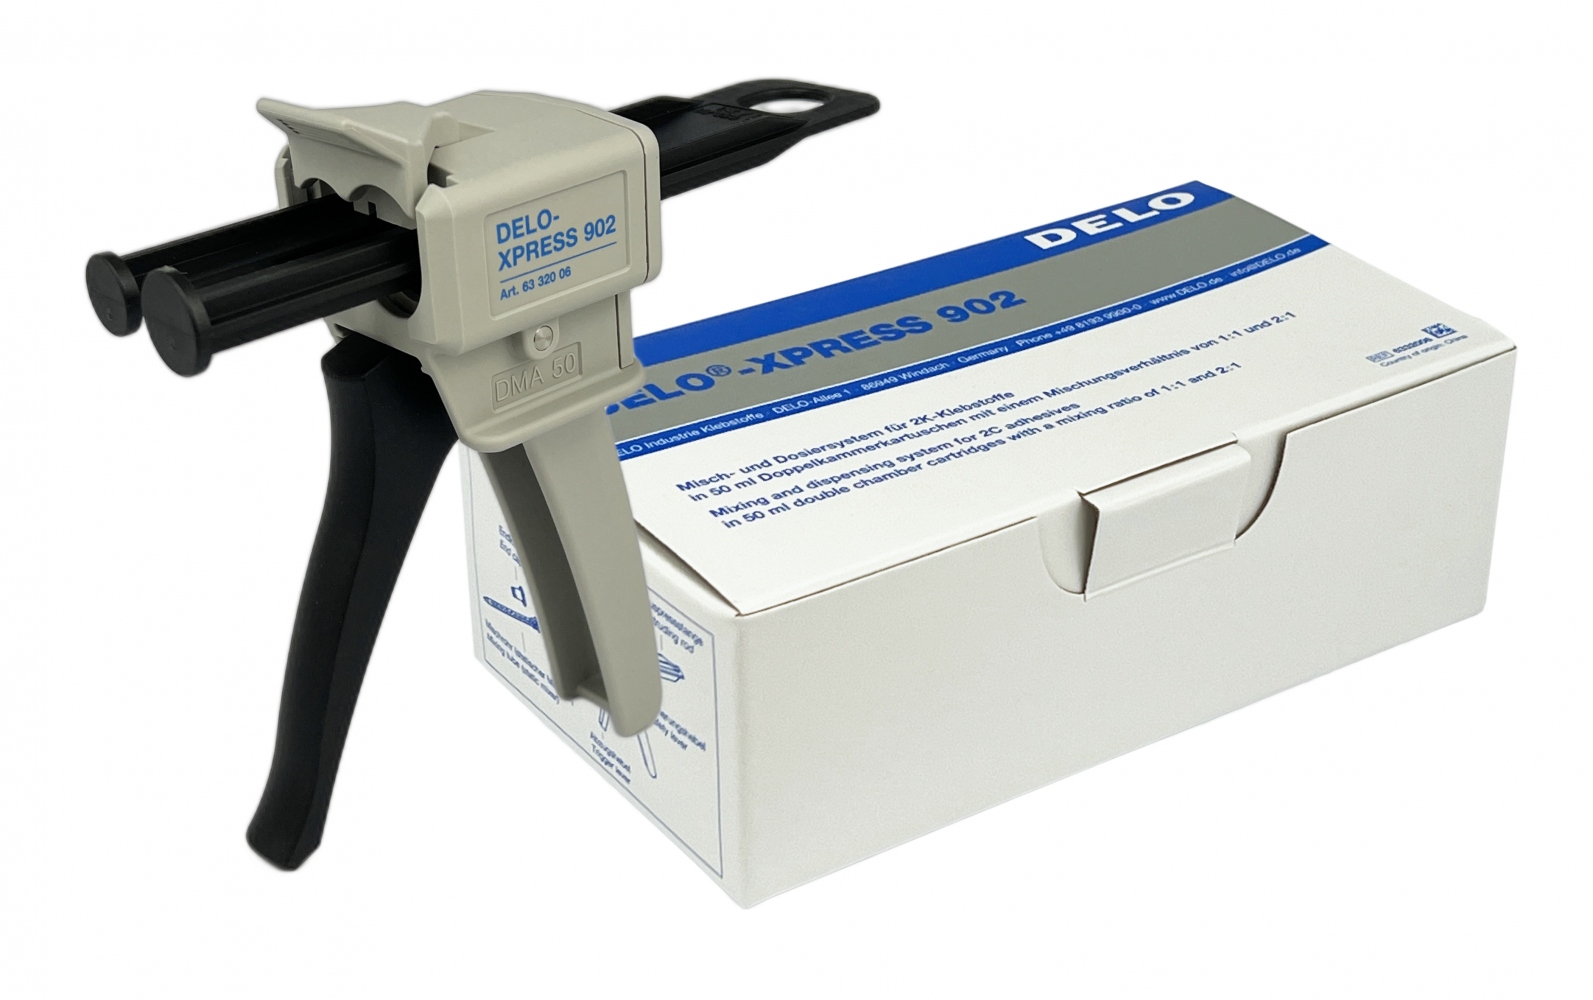 pics/DELO/delo-xpress-902-manual-dispensing-applicator-for-2c-cartridge-system-epoxy-glue-6332006-00.jpg